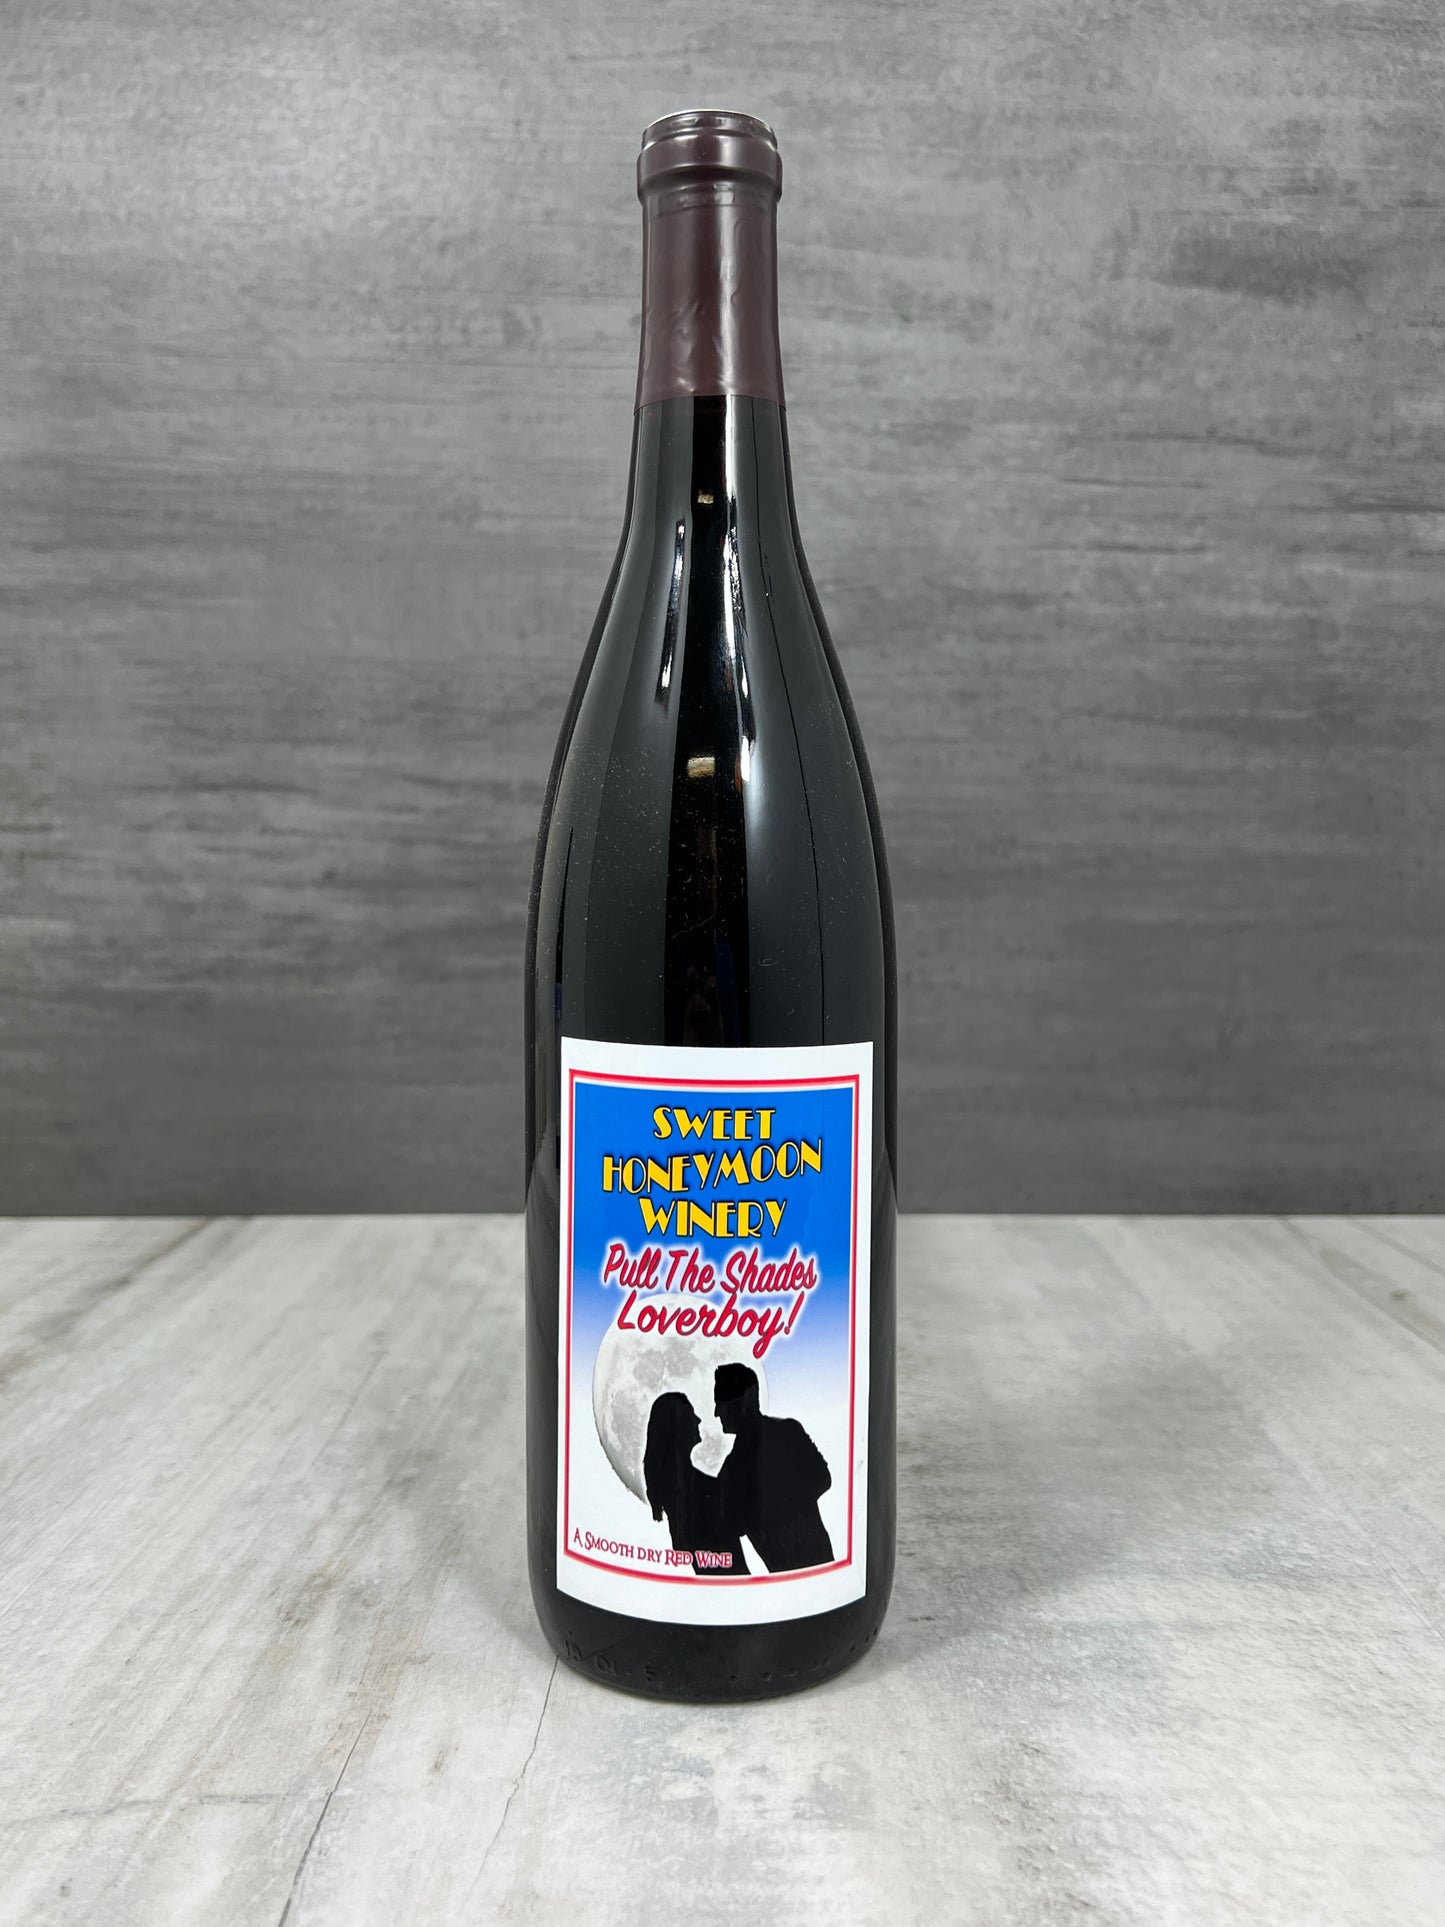 Sweet Honeymoon Wine